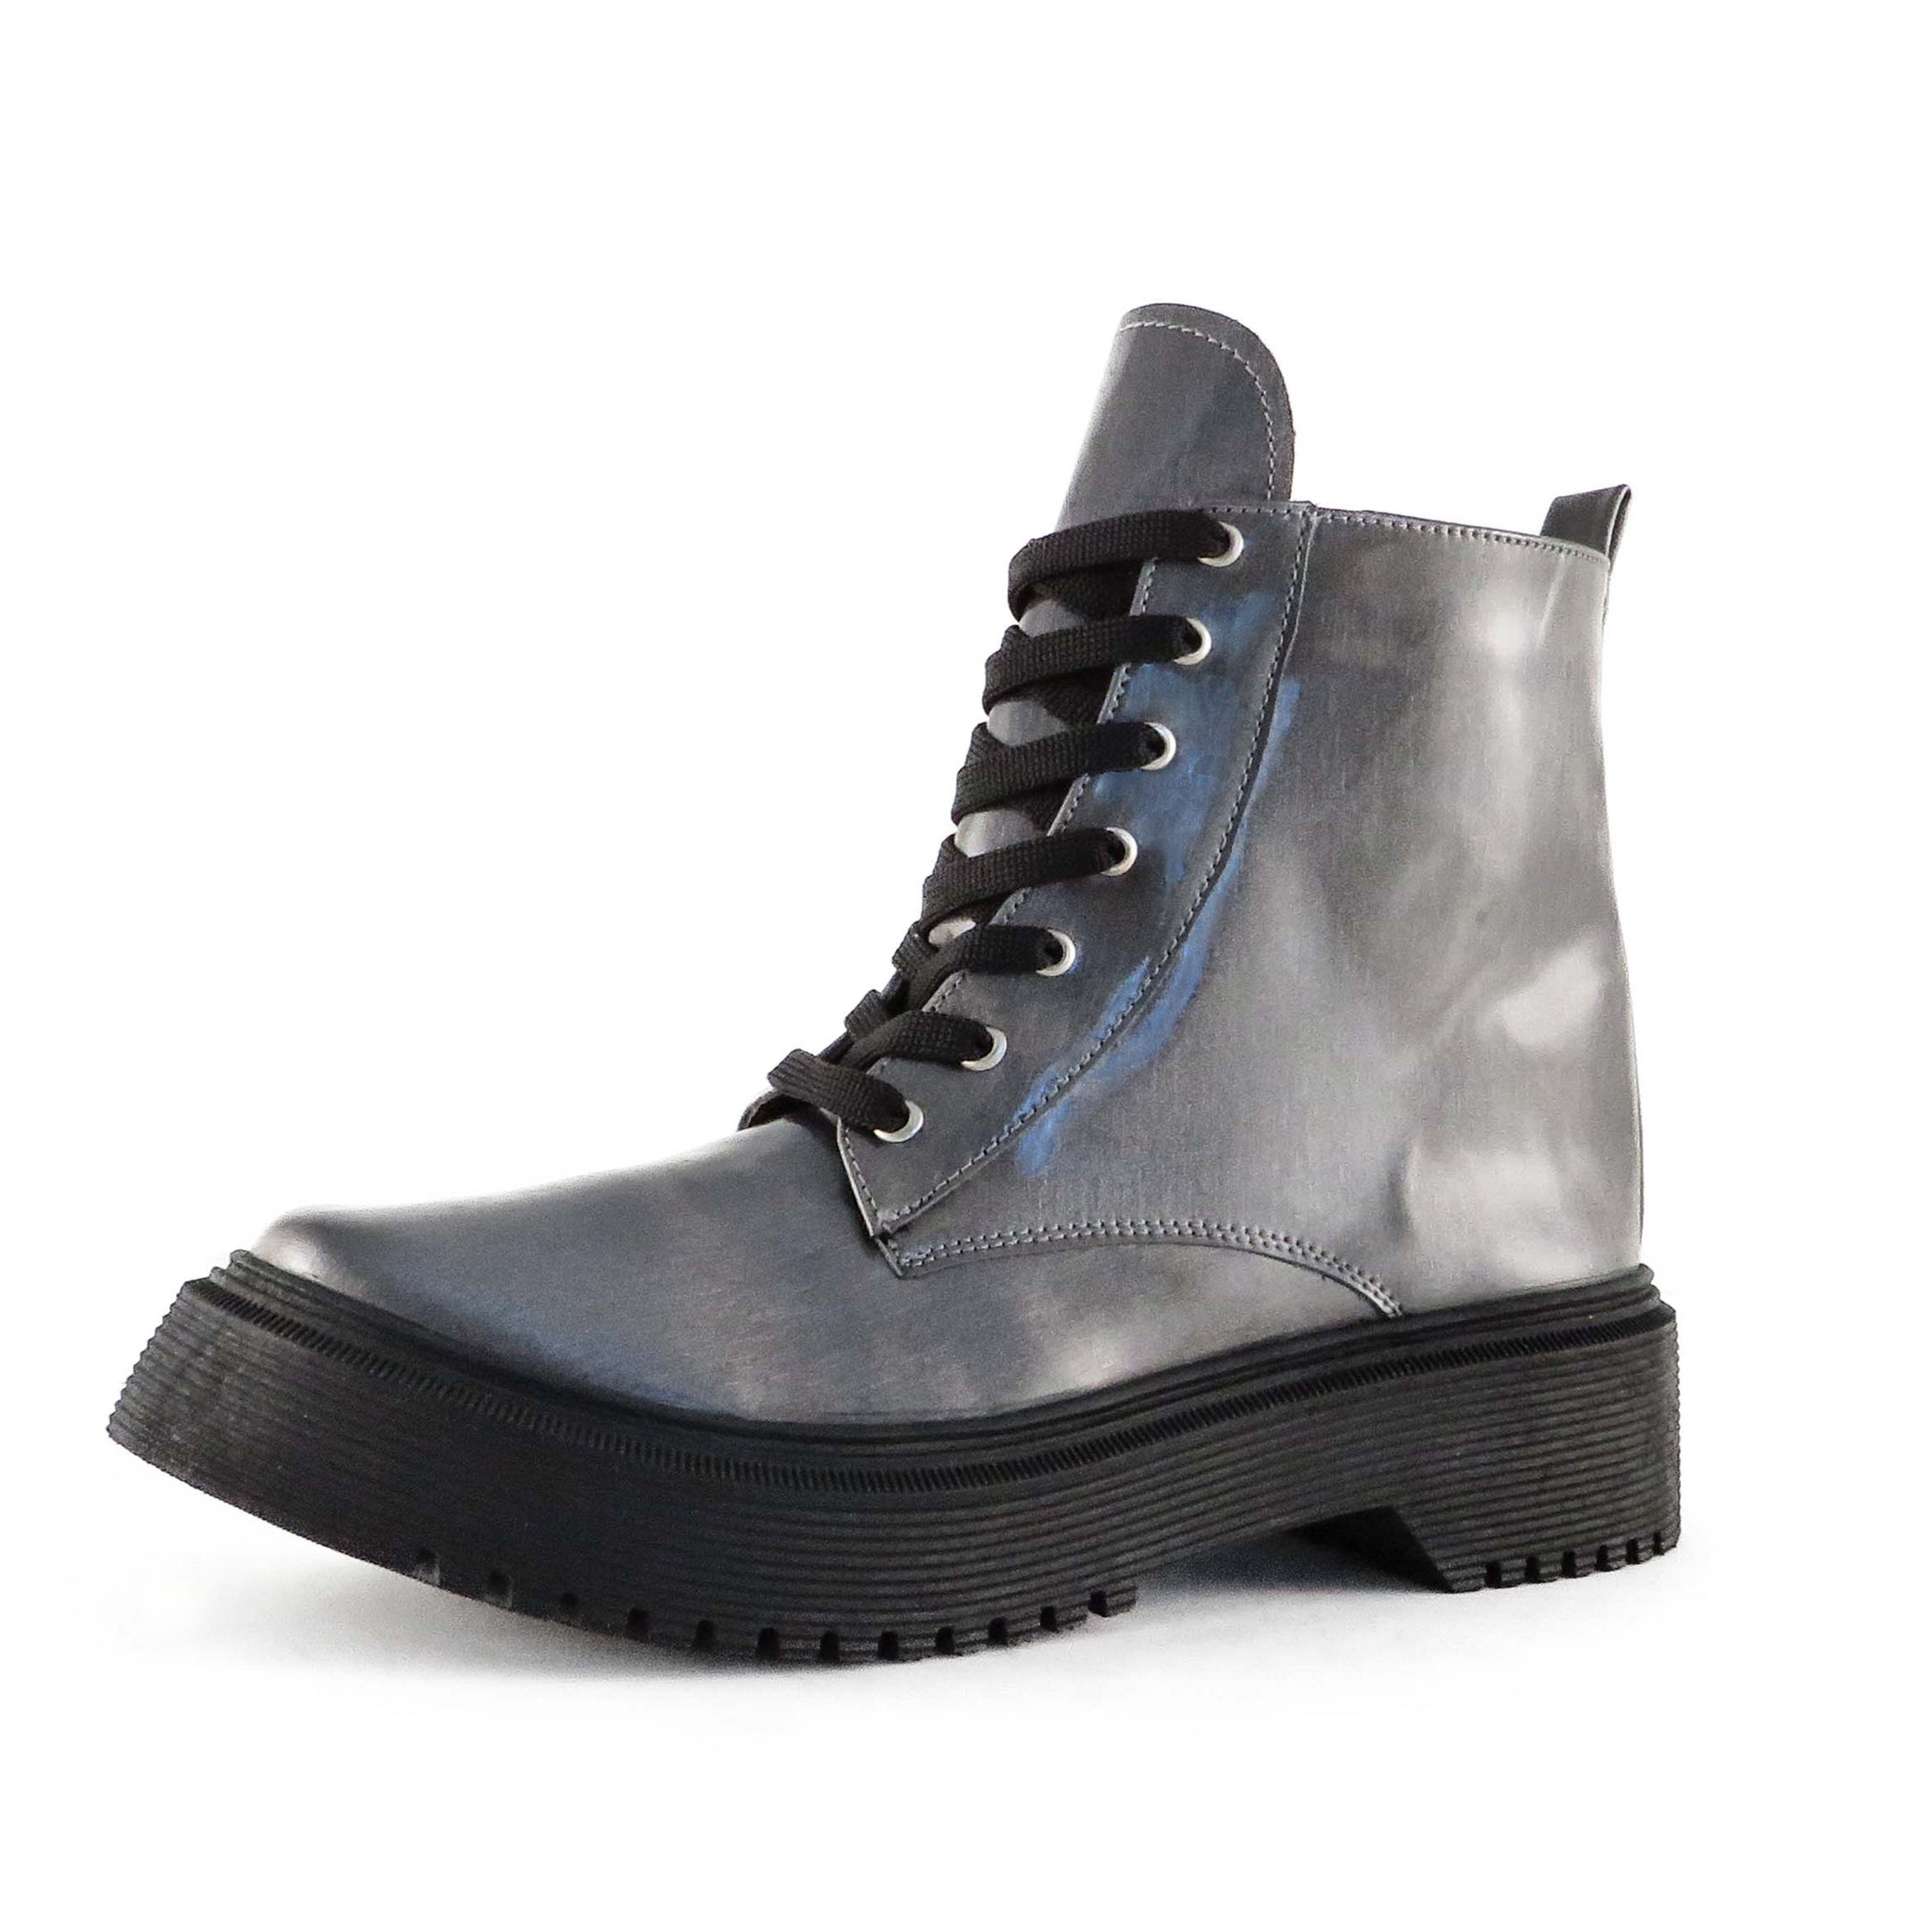 Buy Women's Lunar Combat Boots Monochromatic Silver by Nest Shoes